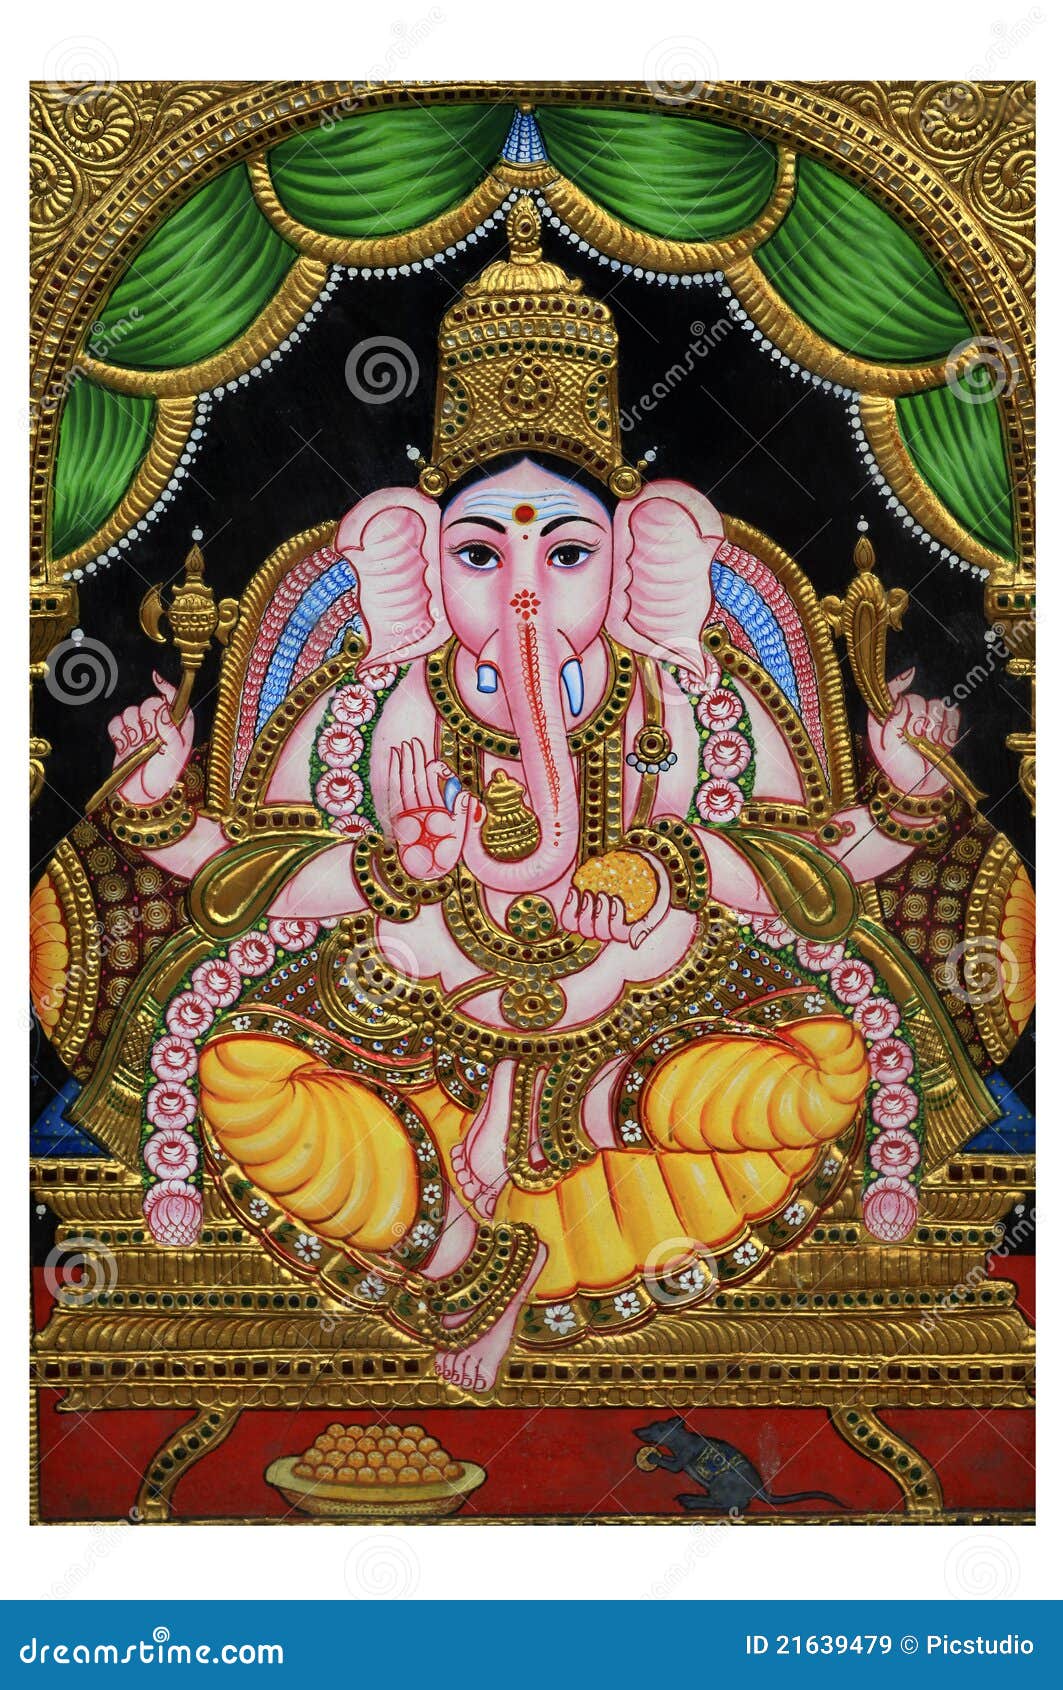 426 Ganesha Painting Stock Photos - Free & Royalty-Free Stock ...